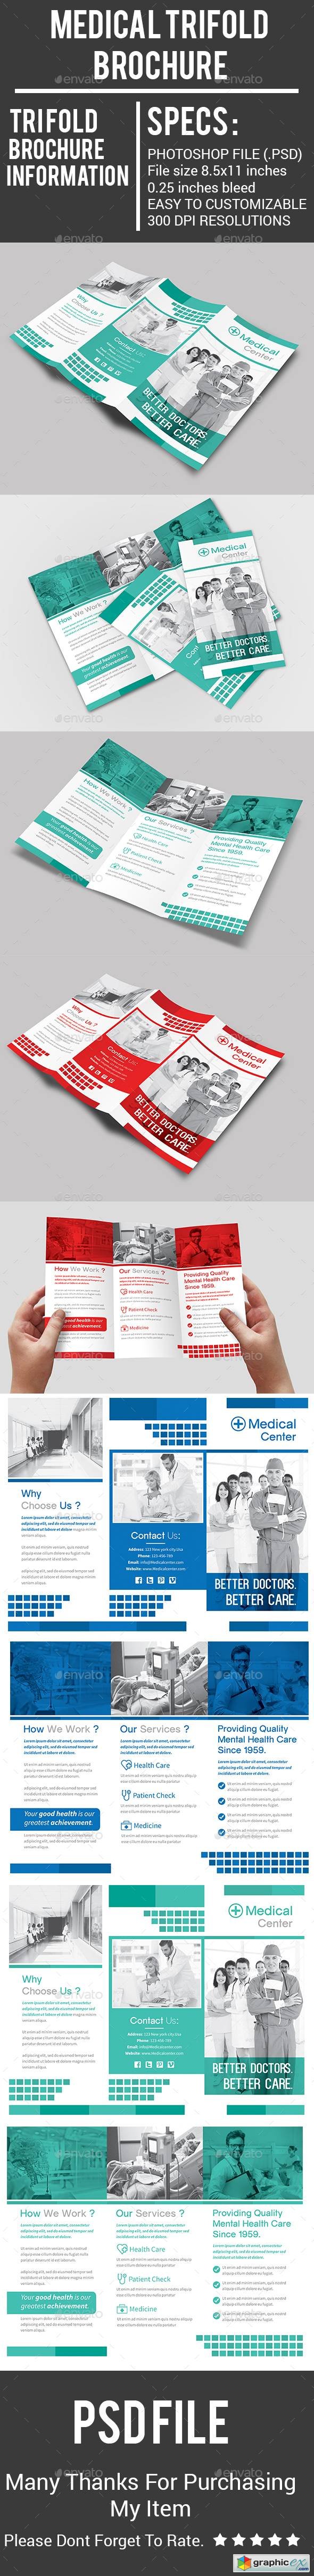 Medical Trifold Brochure 20403318